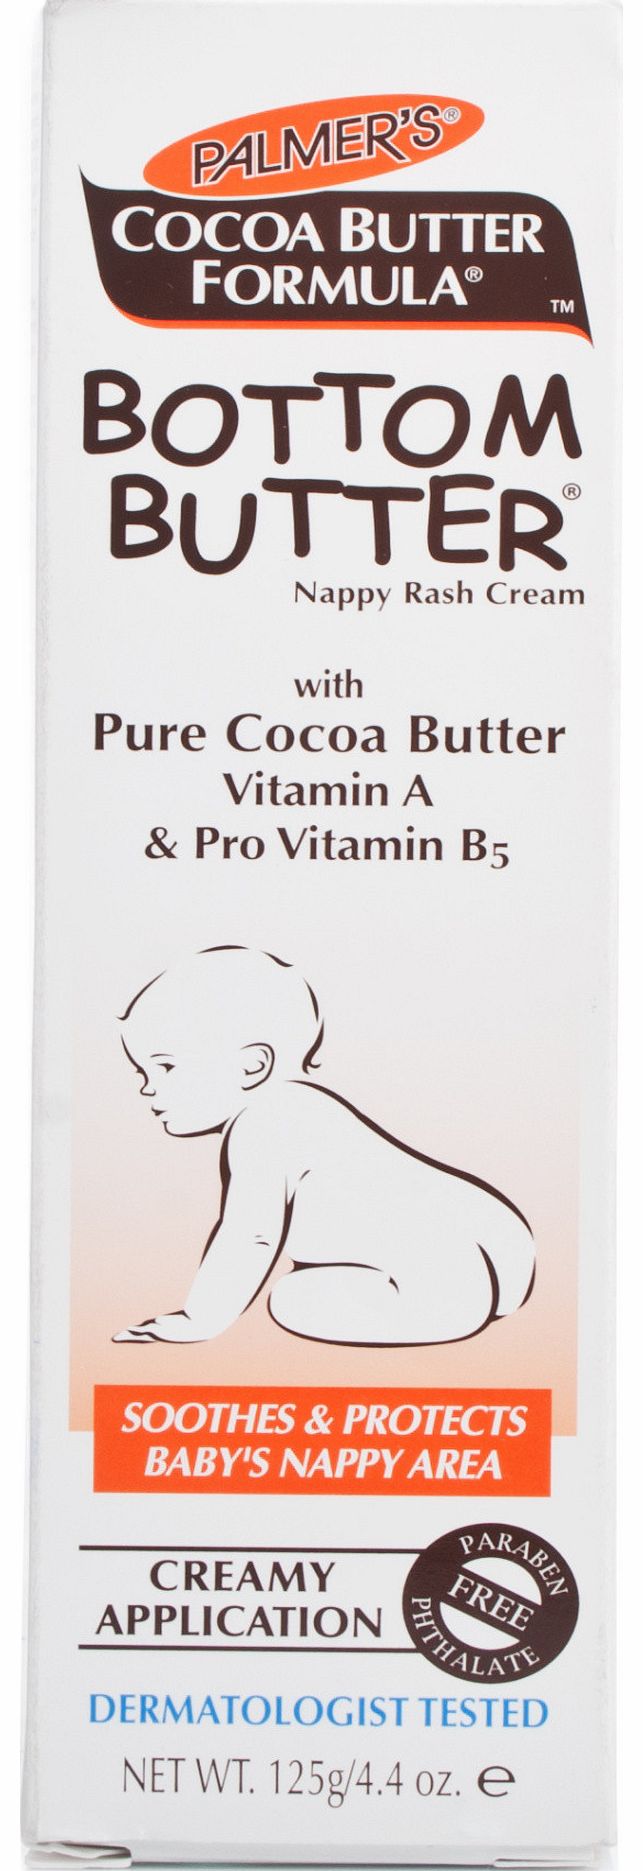 Palmers Cocoa Butter Formula Bottom Nappy Rash